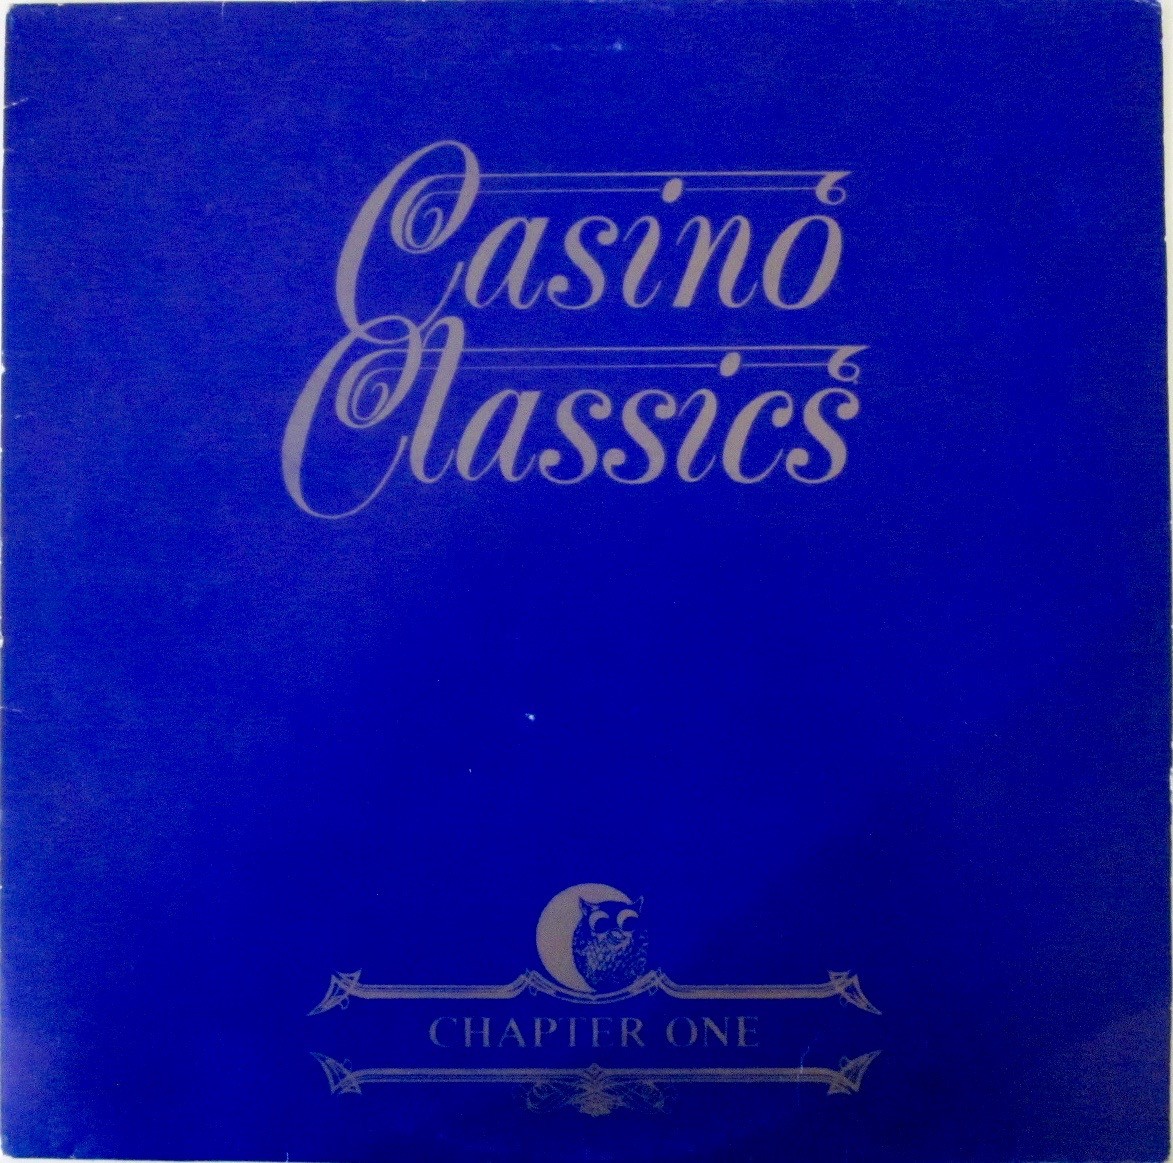 Casino Classics Chapter One LP